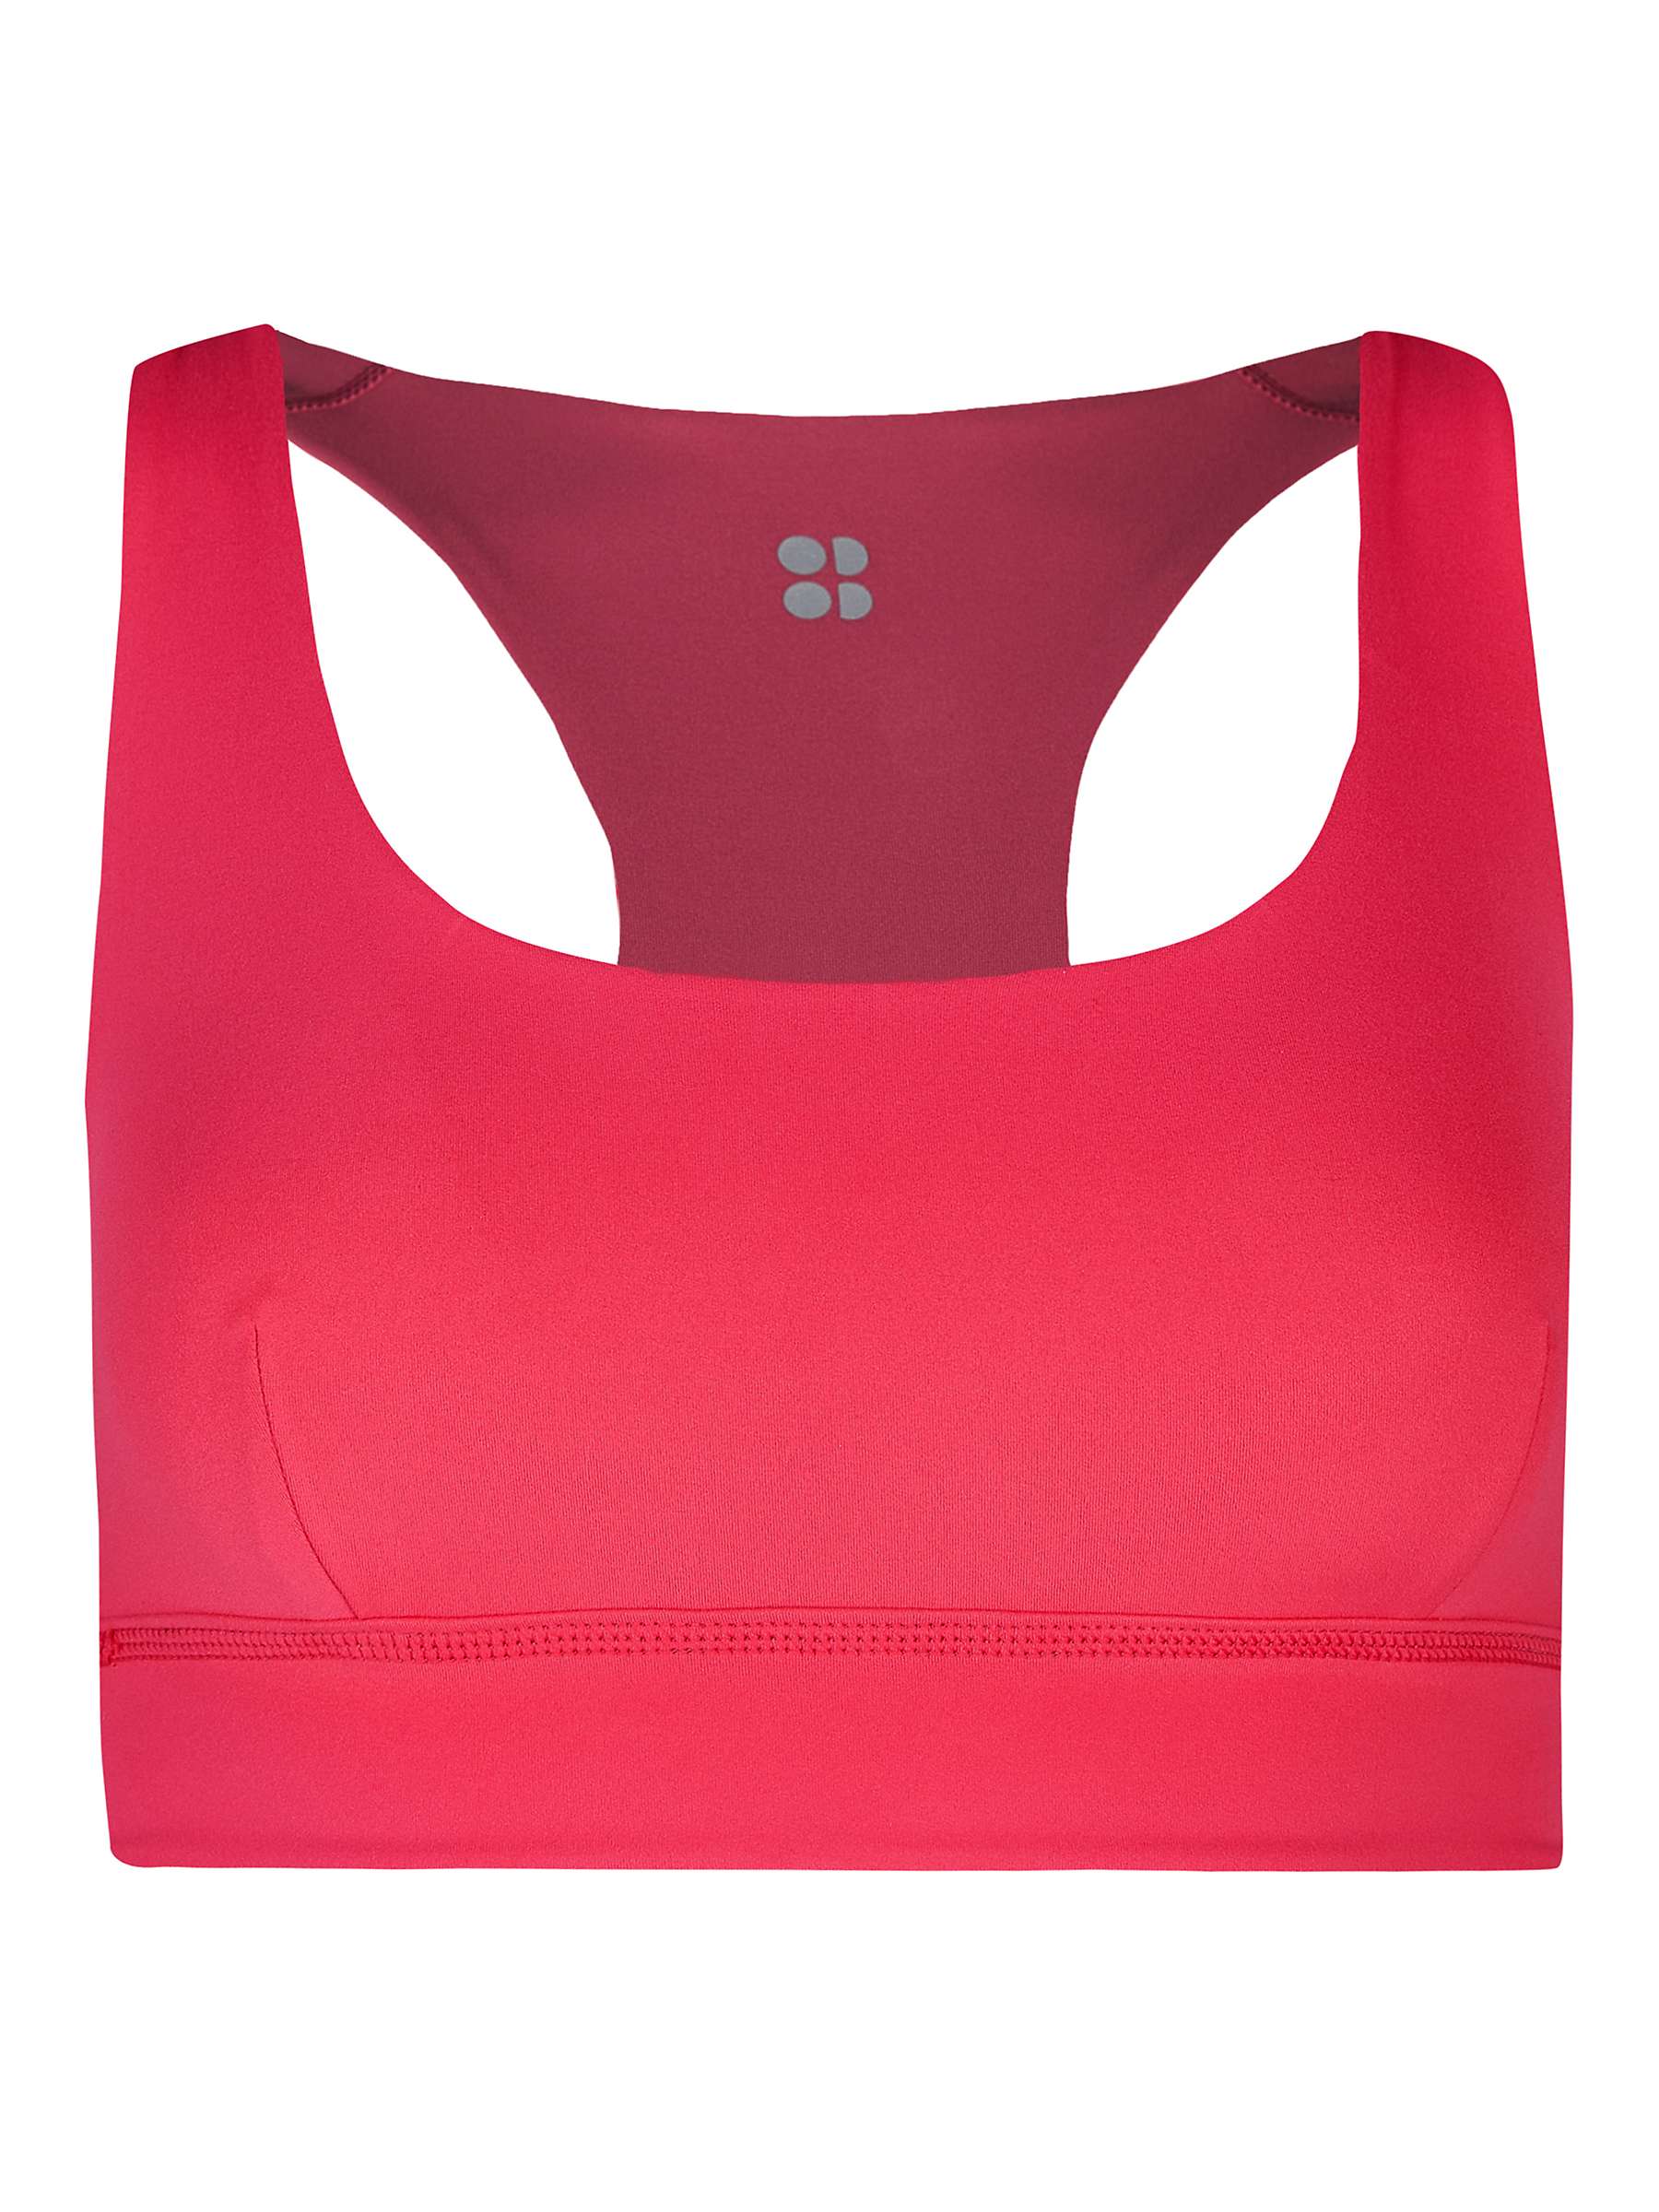 Buy Sweaty Betty Super Soft Reversible Yoga Bra Online at johnlewis.com